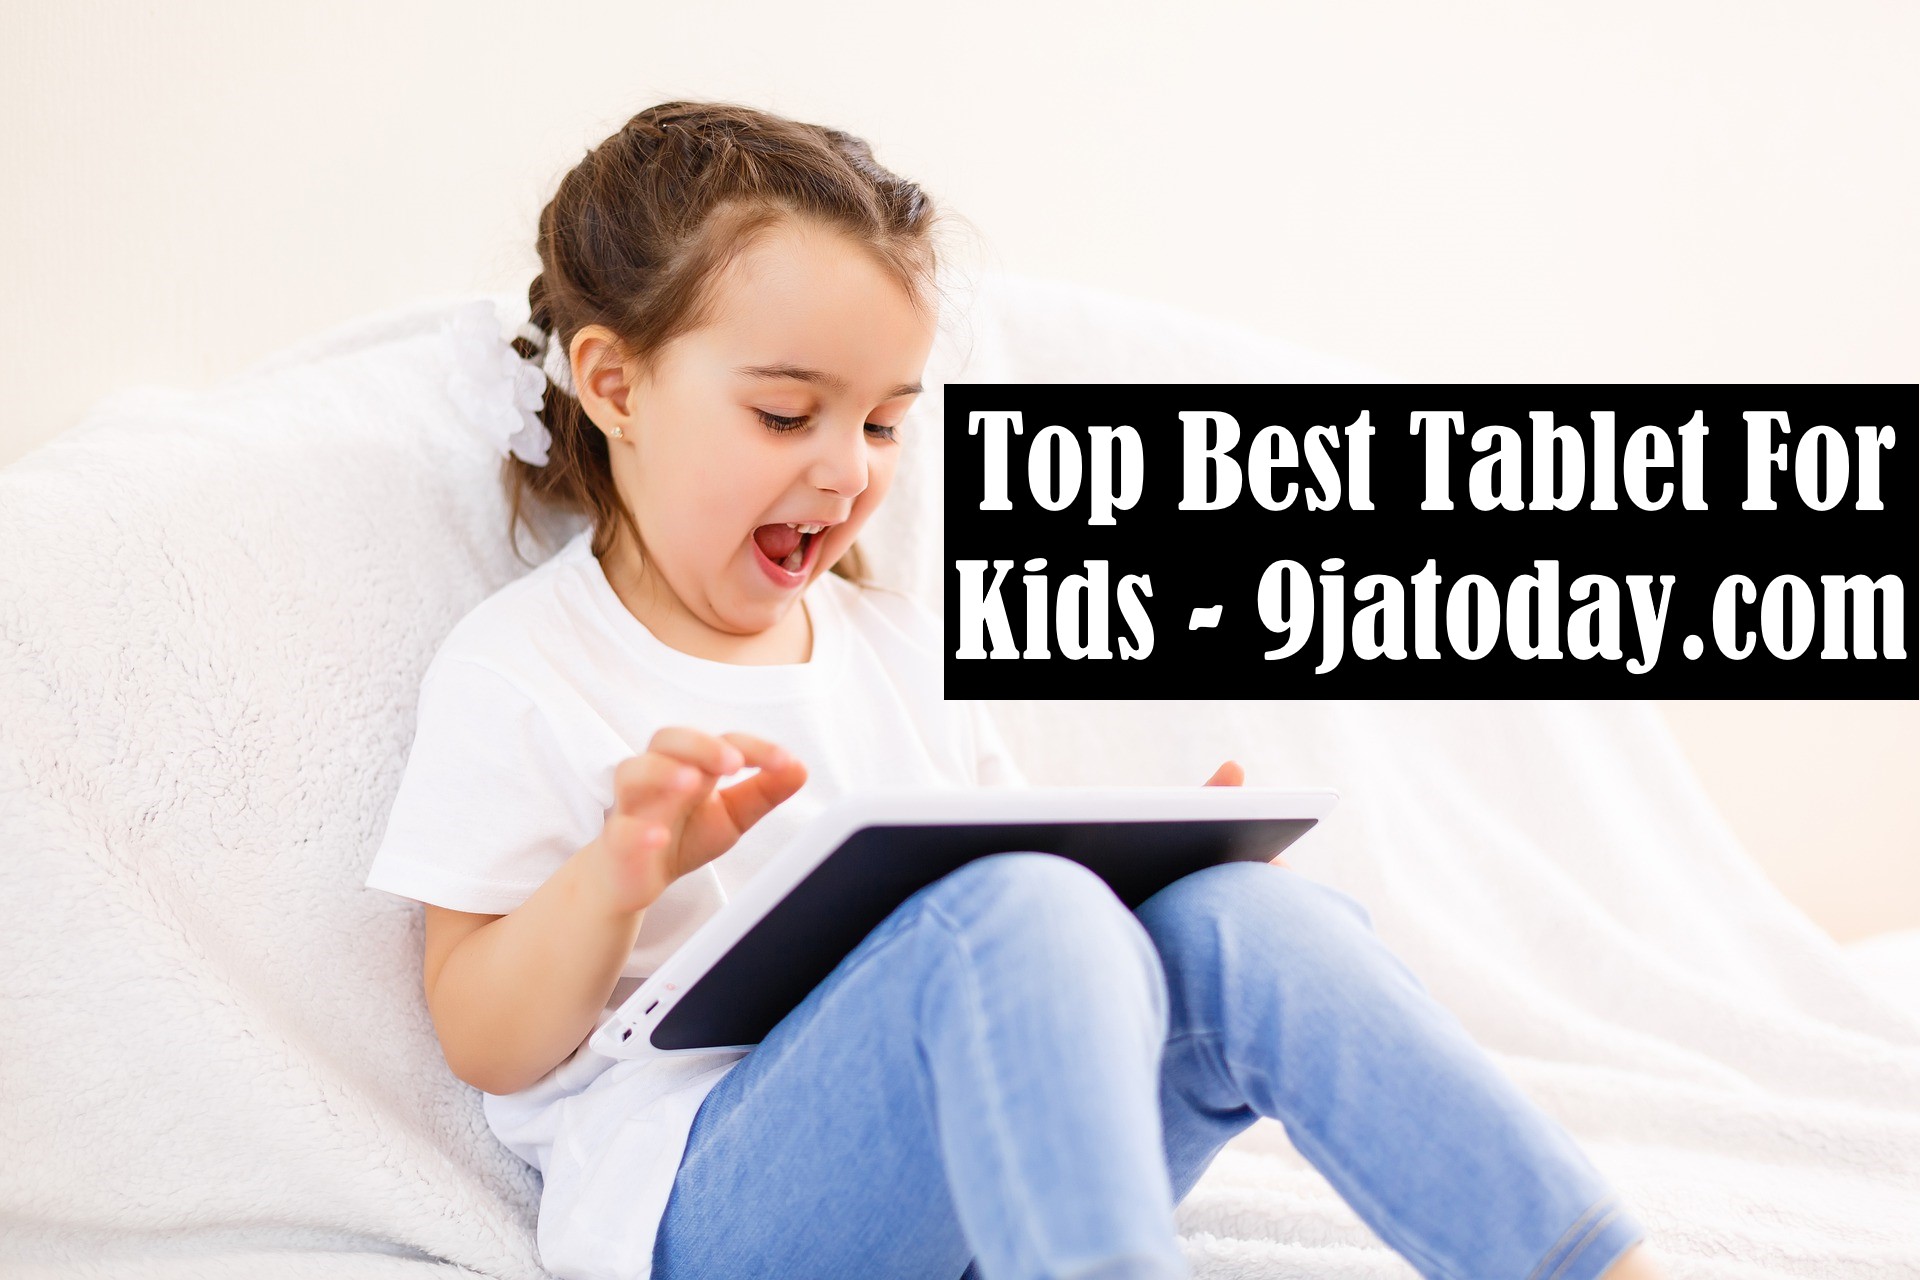 Top Best Tablet For Kids 2021